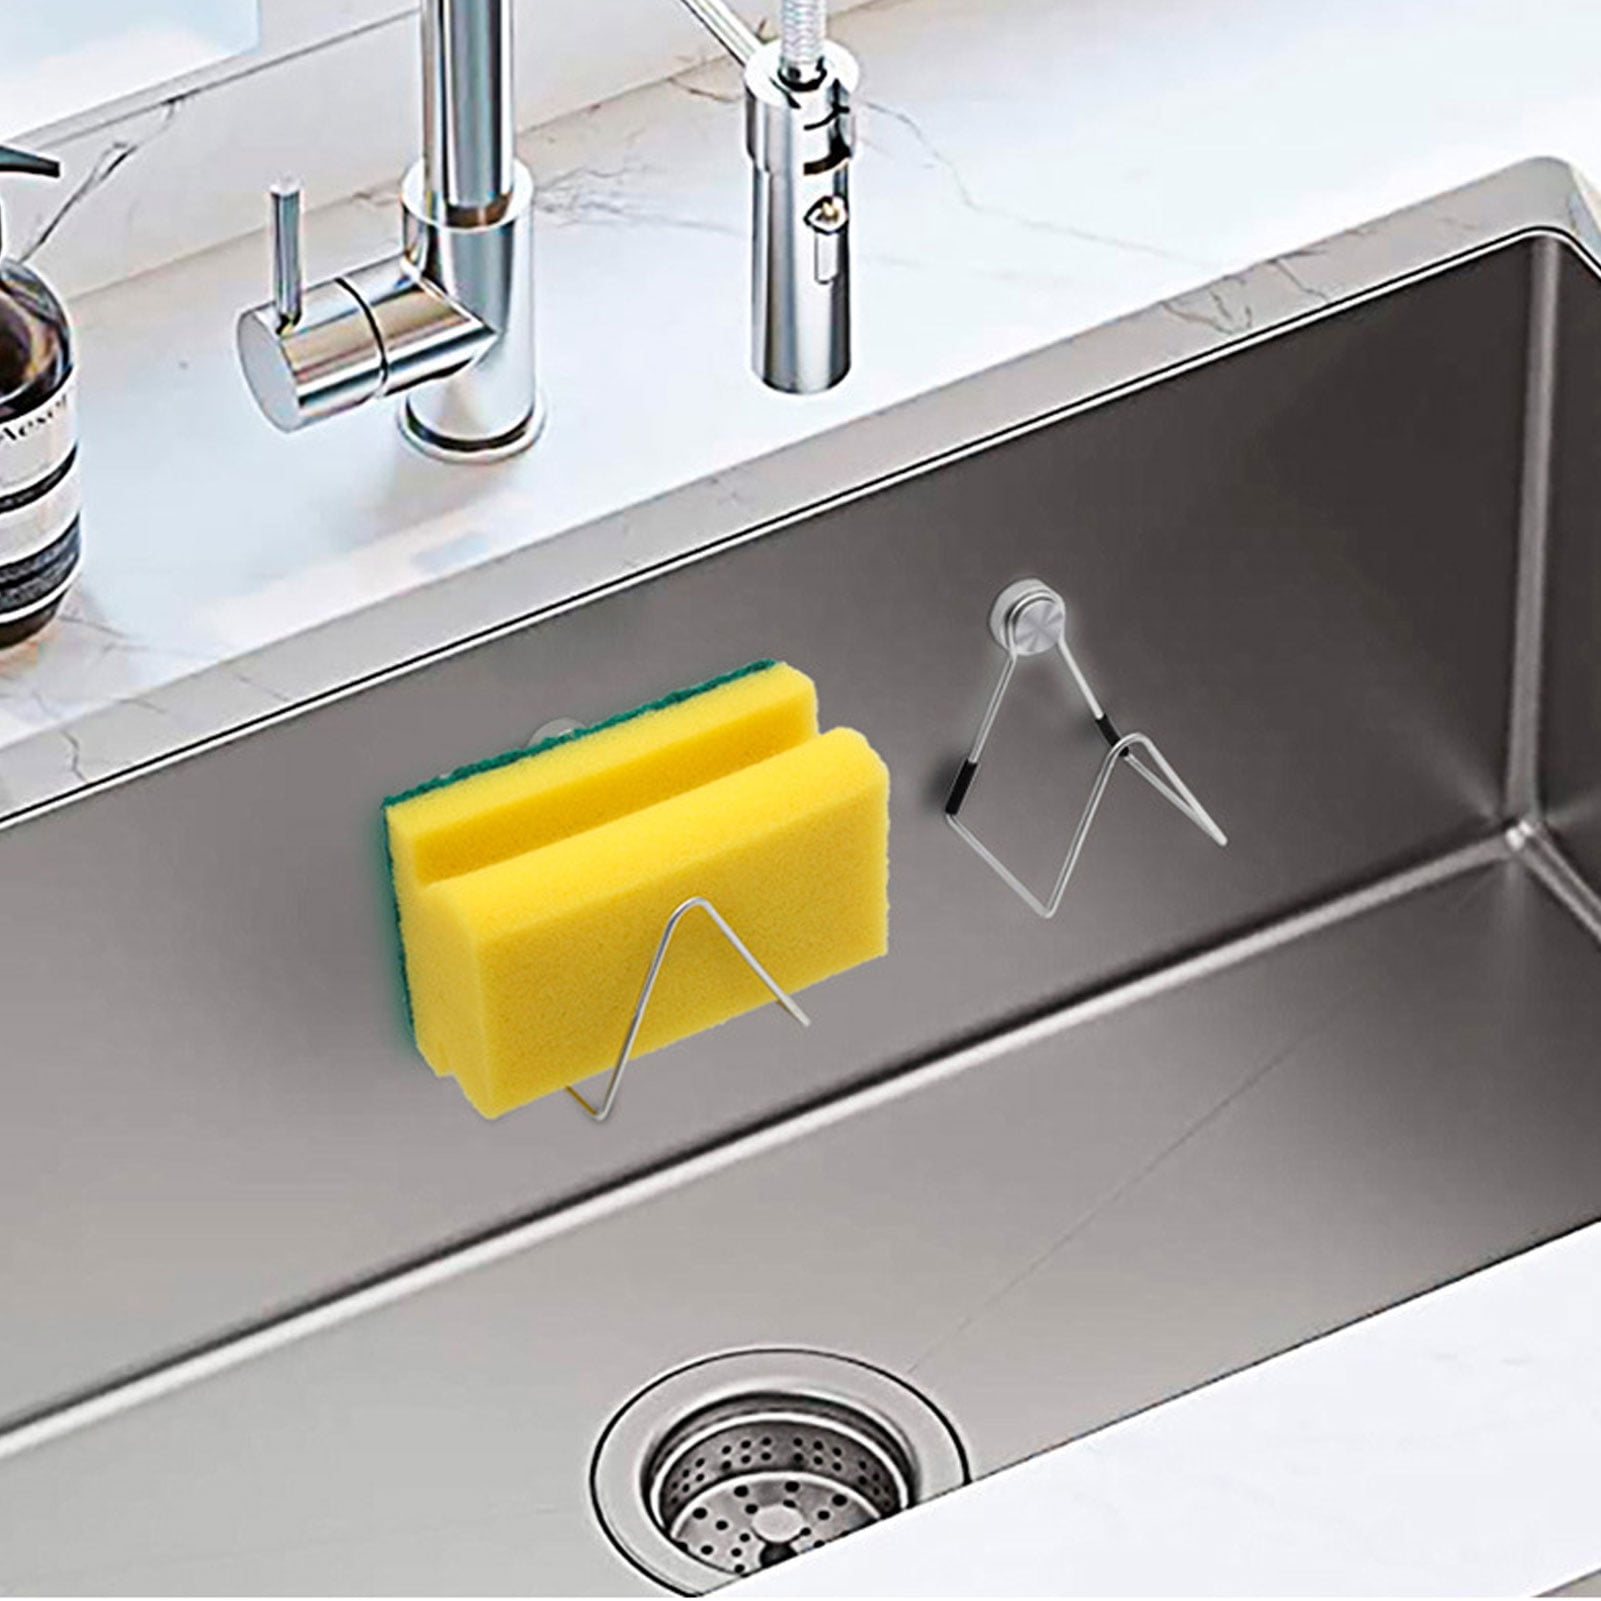 Prudiut 2 PCS Adhesive Sponge Holder for Kitchen Sink, Stainless Steel  Sponge Holder Sink Caddy Waterproof Kitchen Sink Sponge Holder Quick Drying